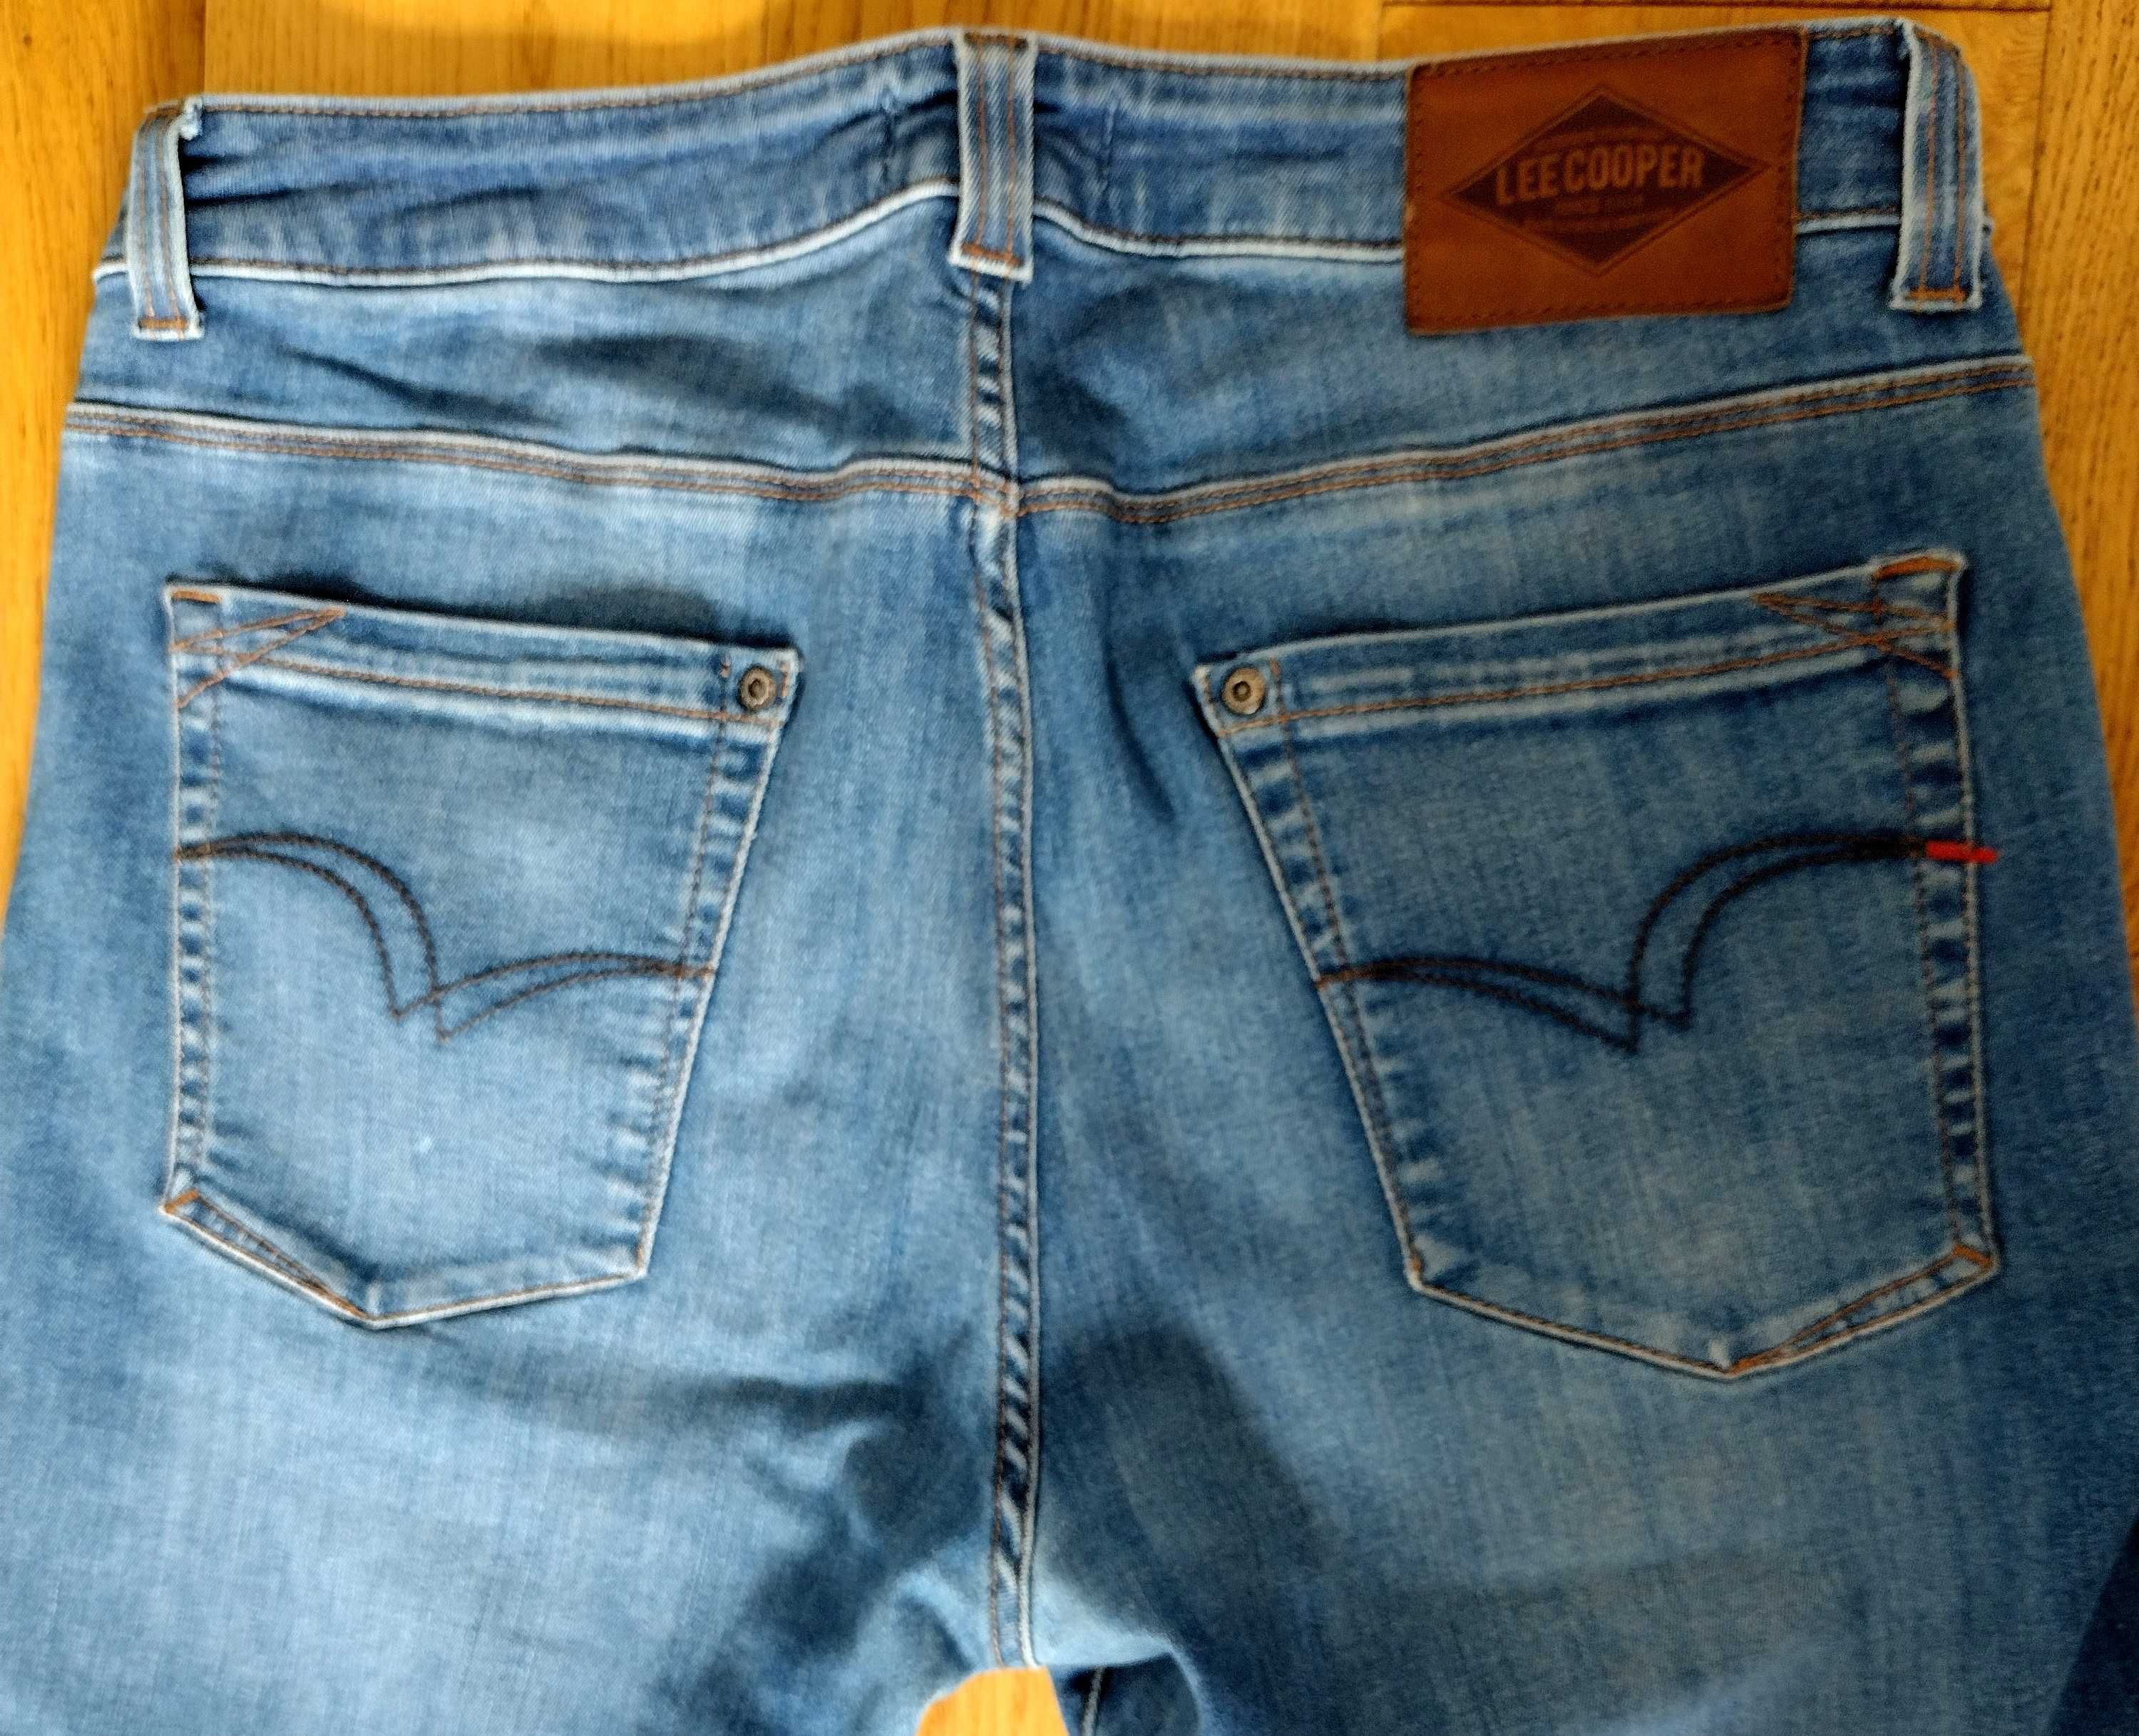 Oryginalne jeansy Lee Cooper, W32 L34, SLIM, Jak nowe